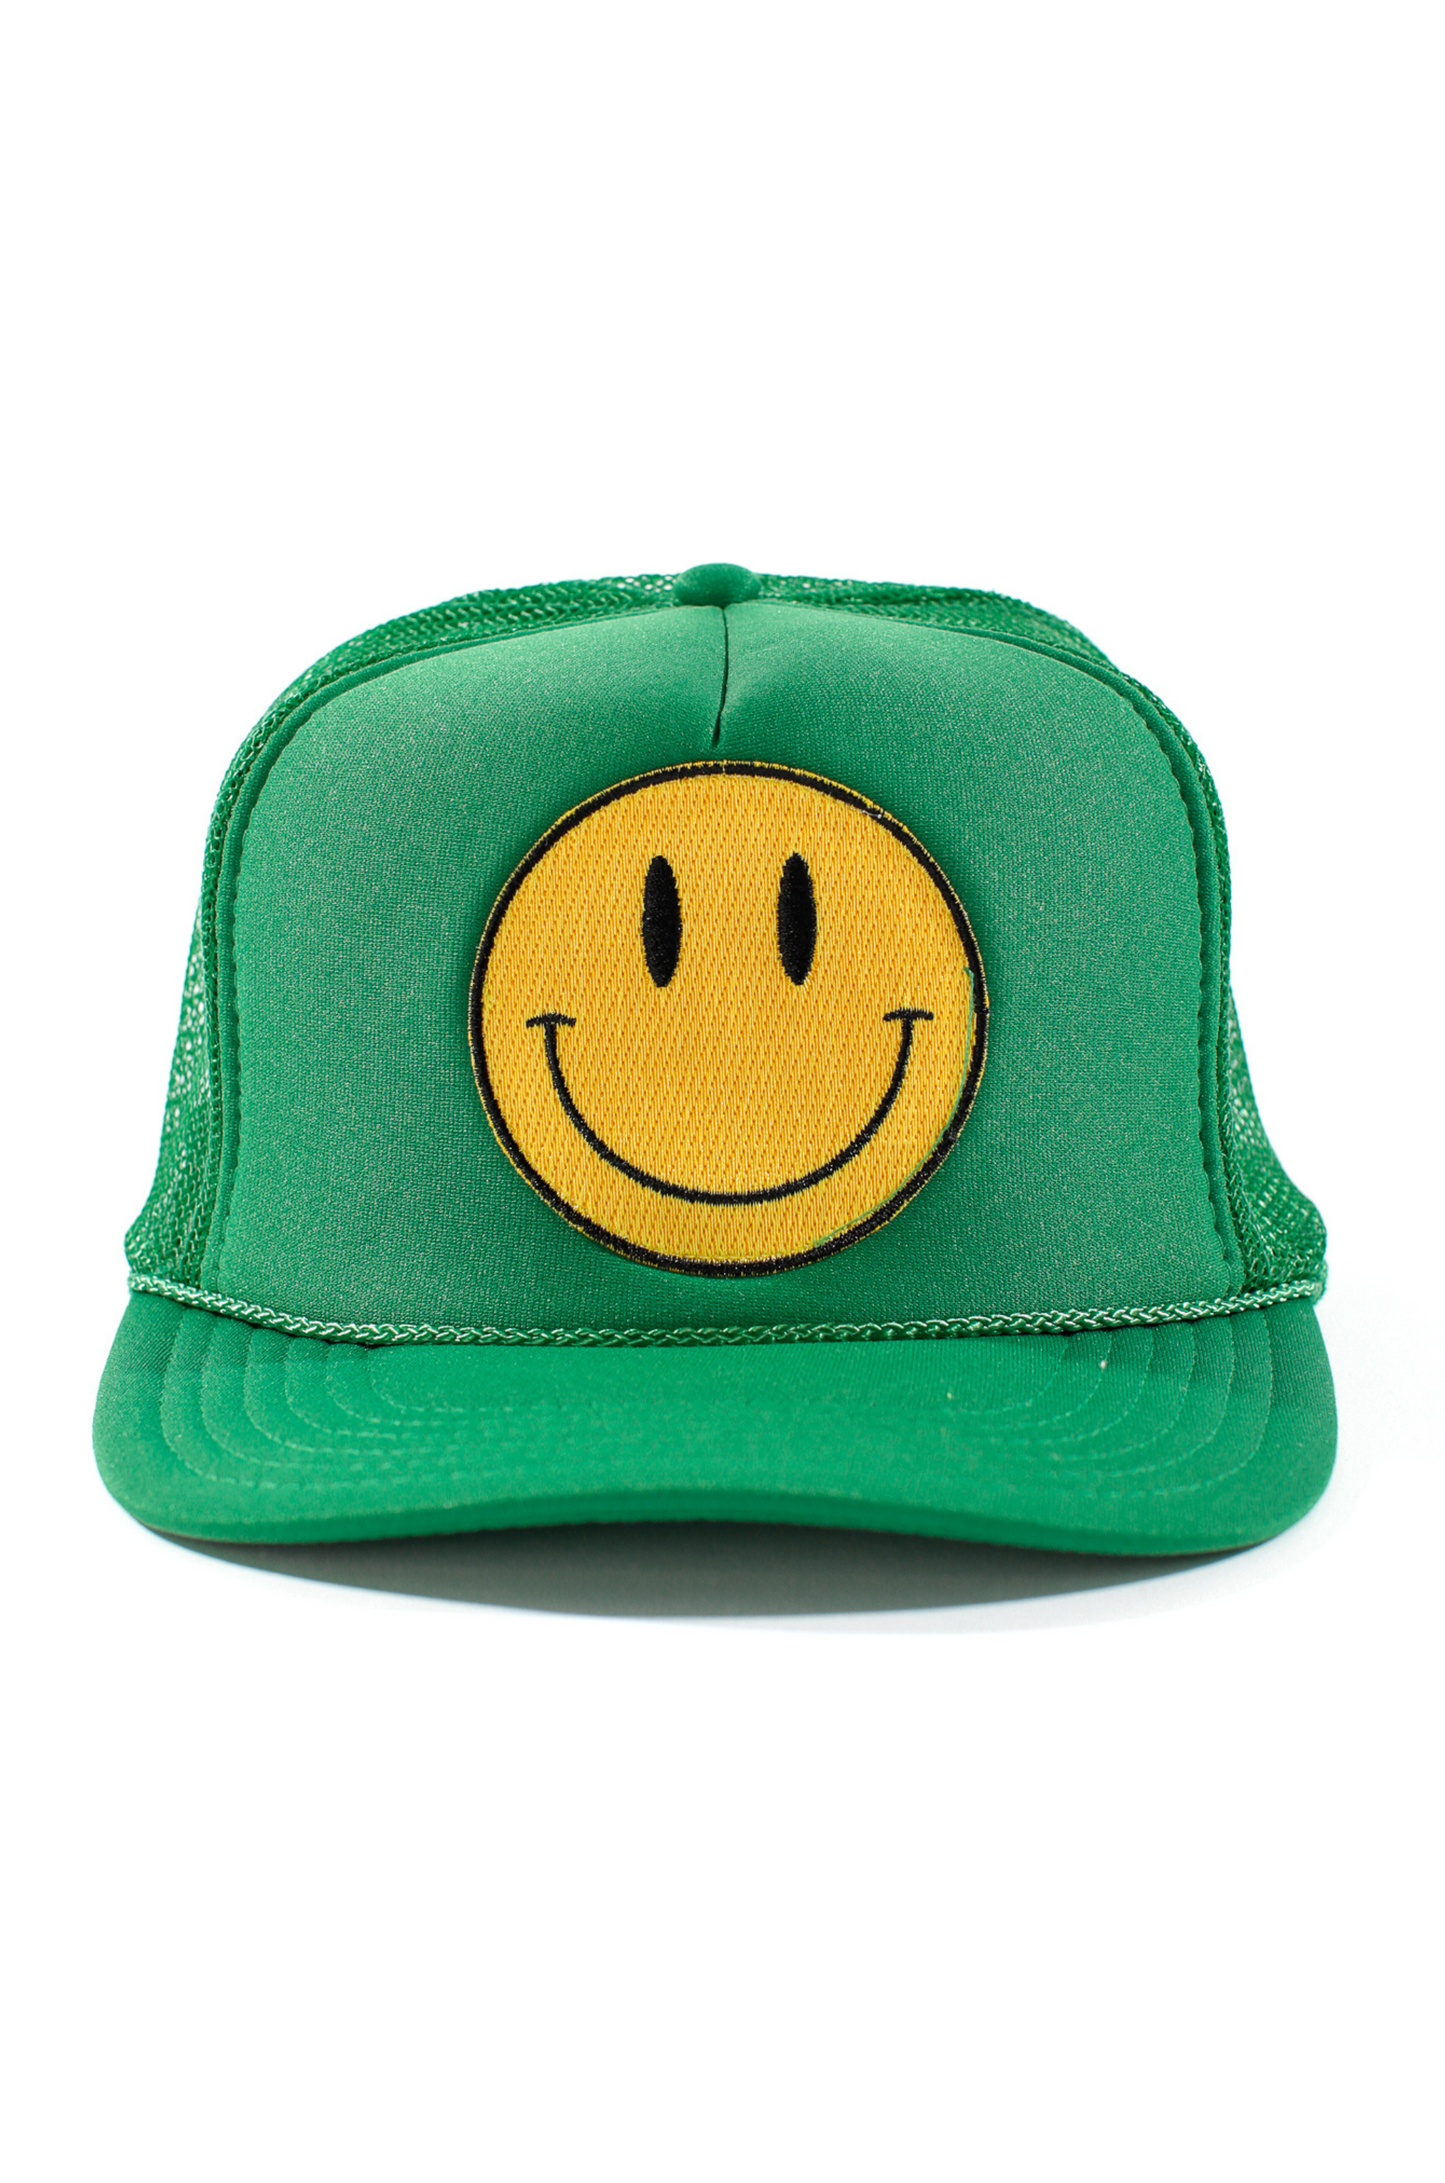 Happy Hat - Green